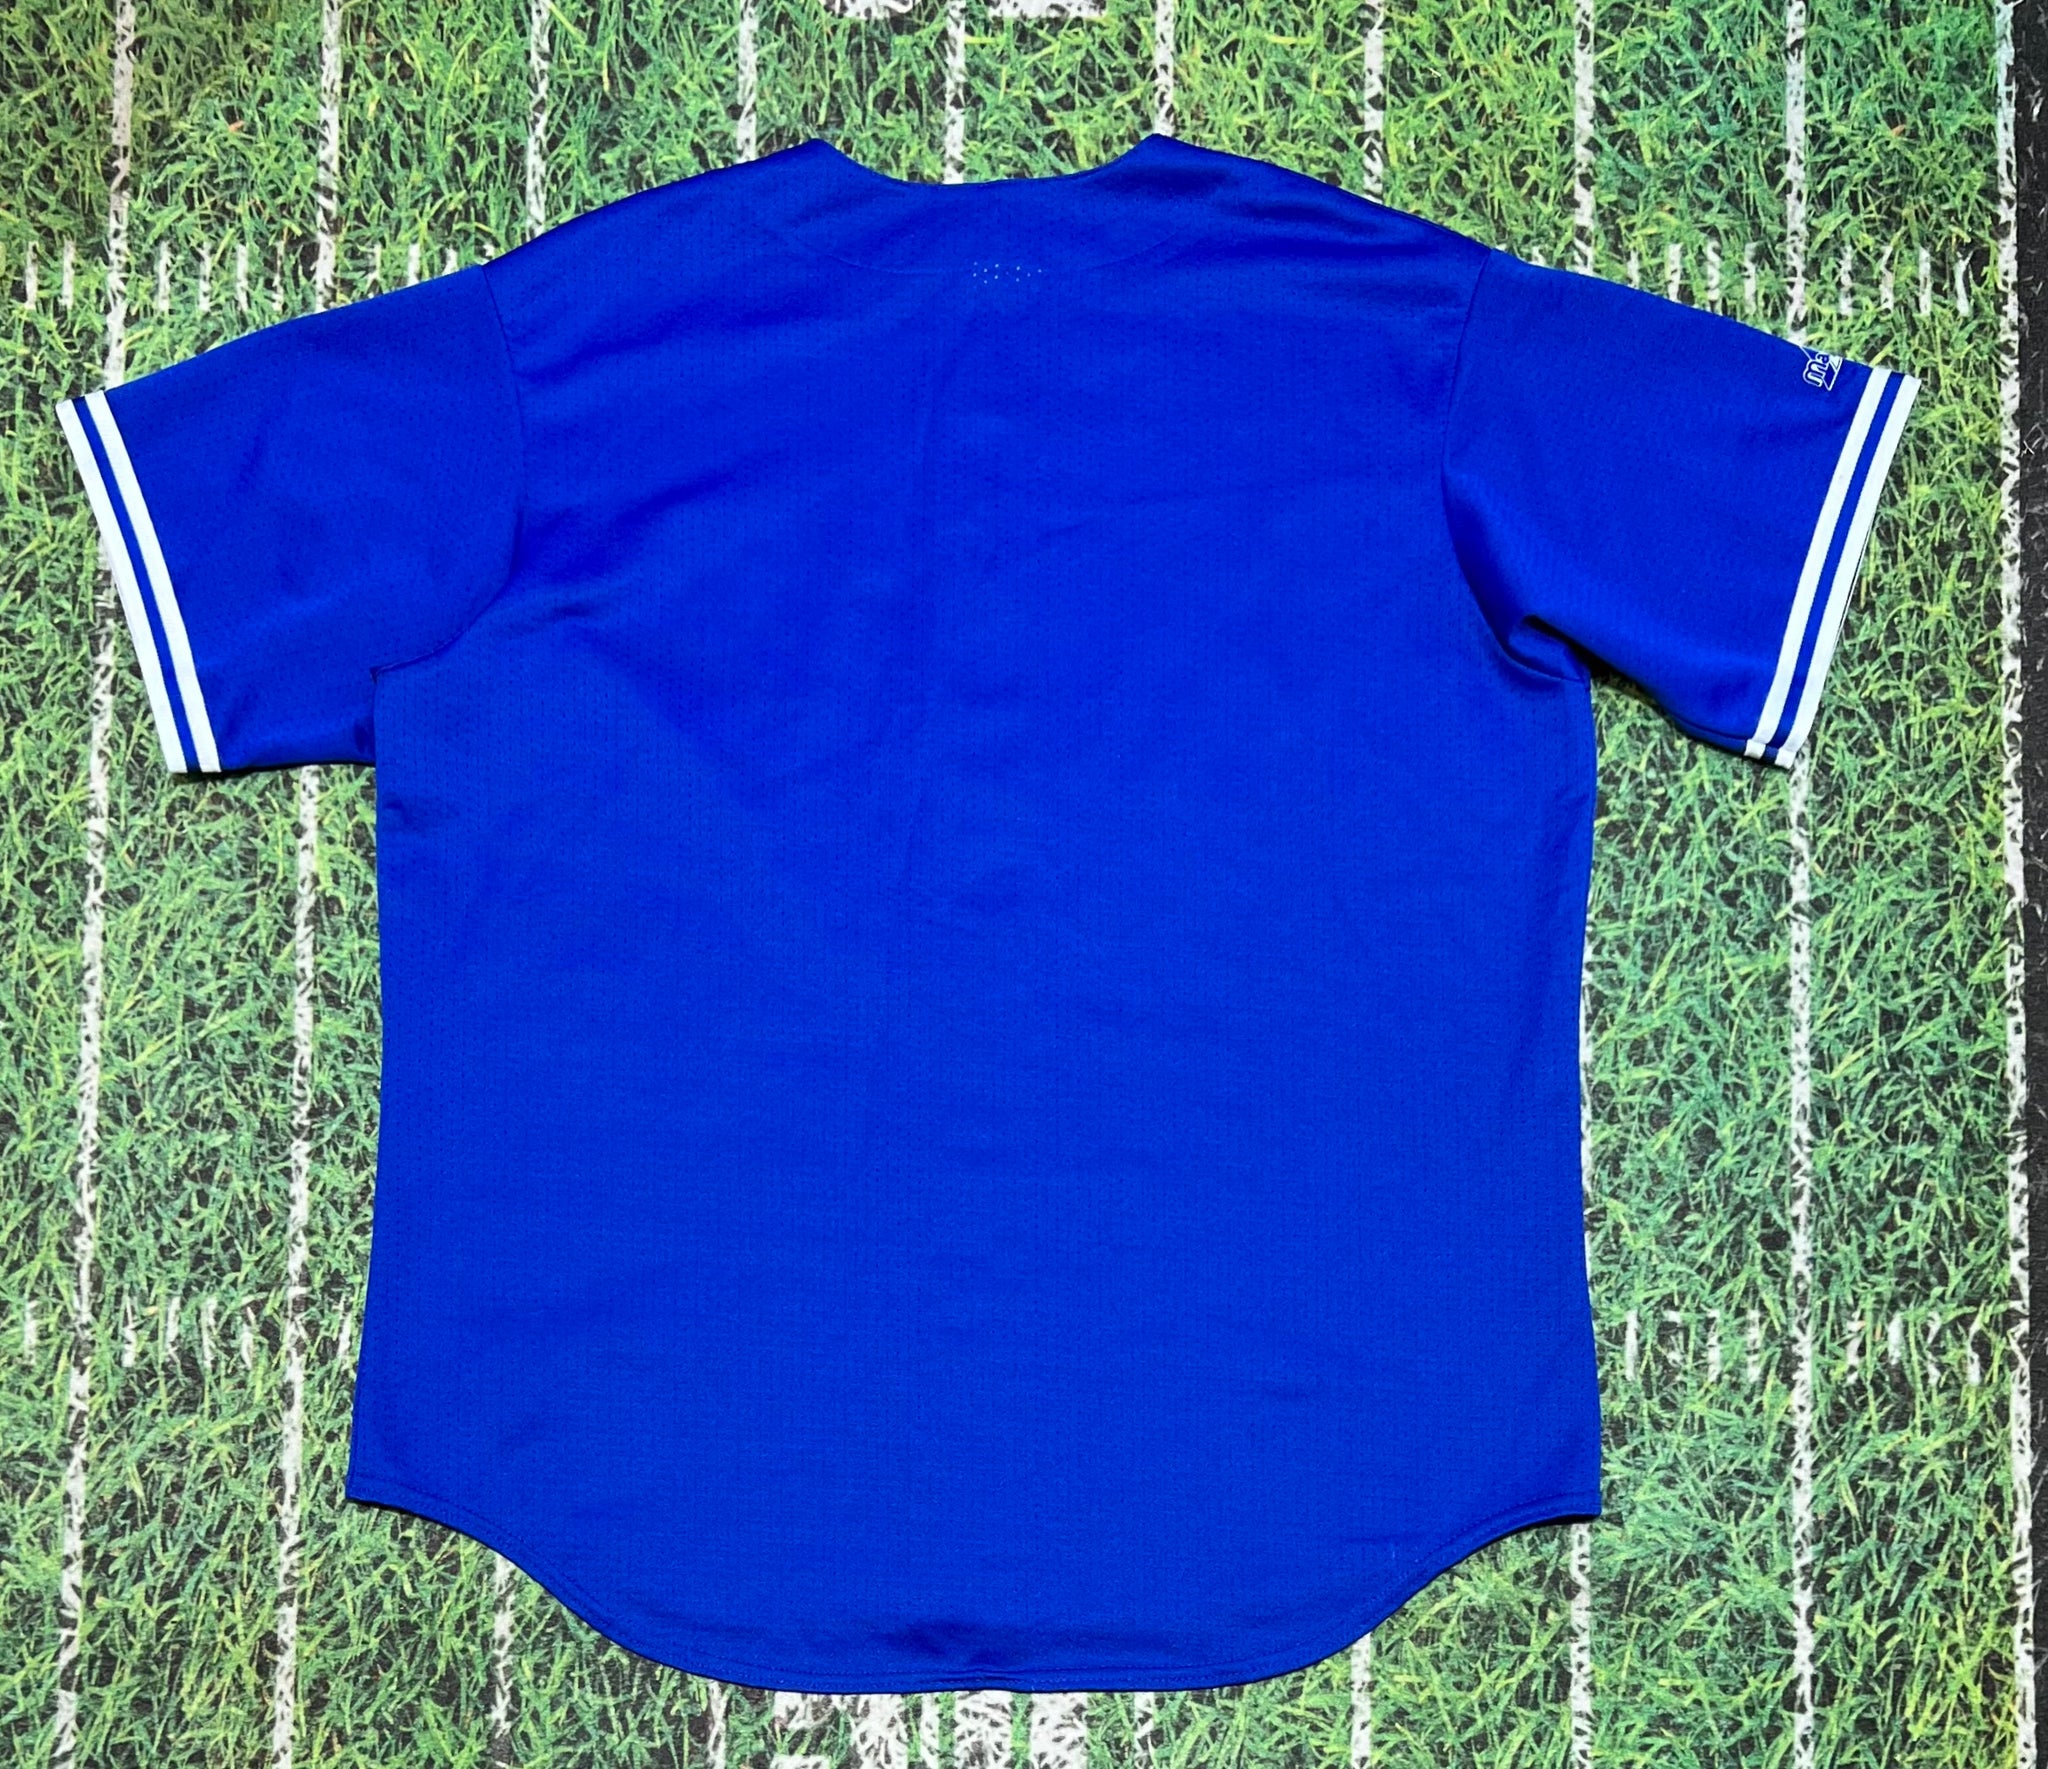 Vintage LOS ANGELES DODGERS MLB Majestic Jersey XL – XL3 VINTAGE CLOTHING